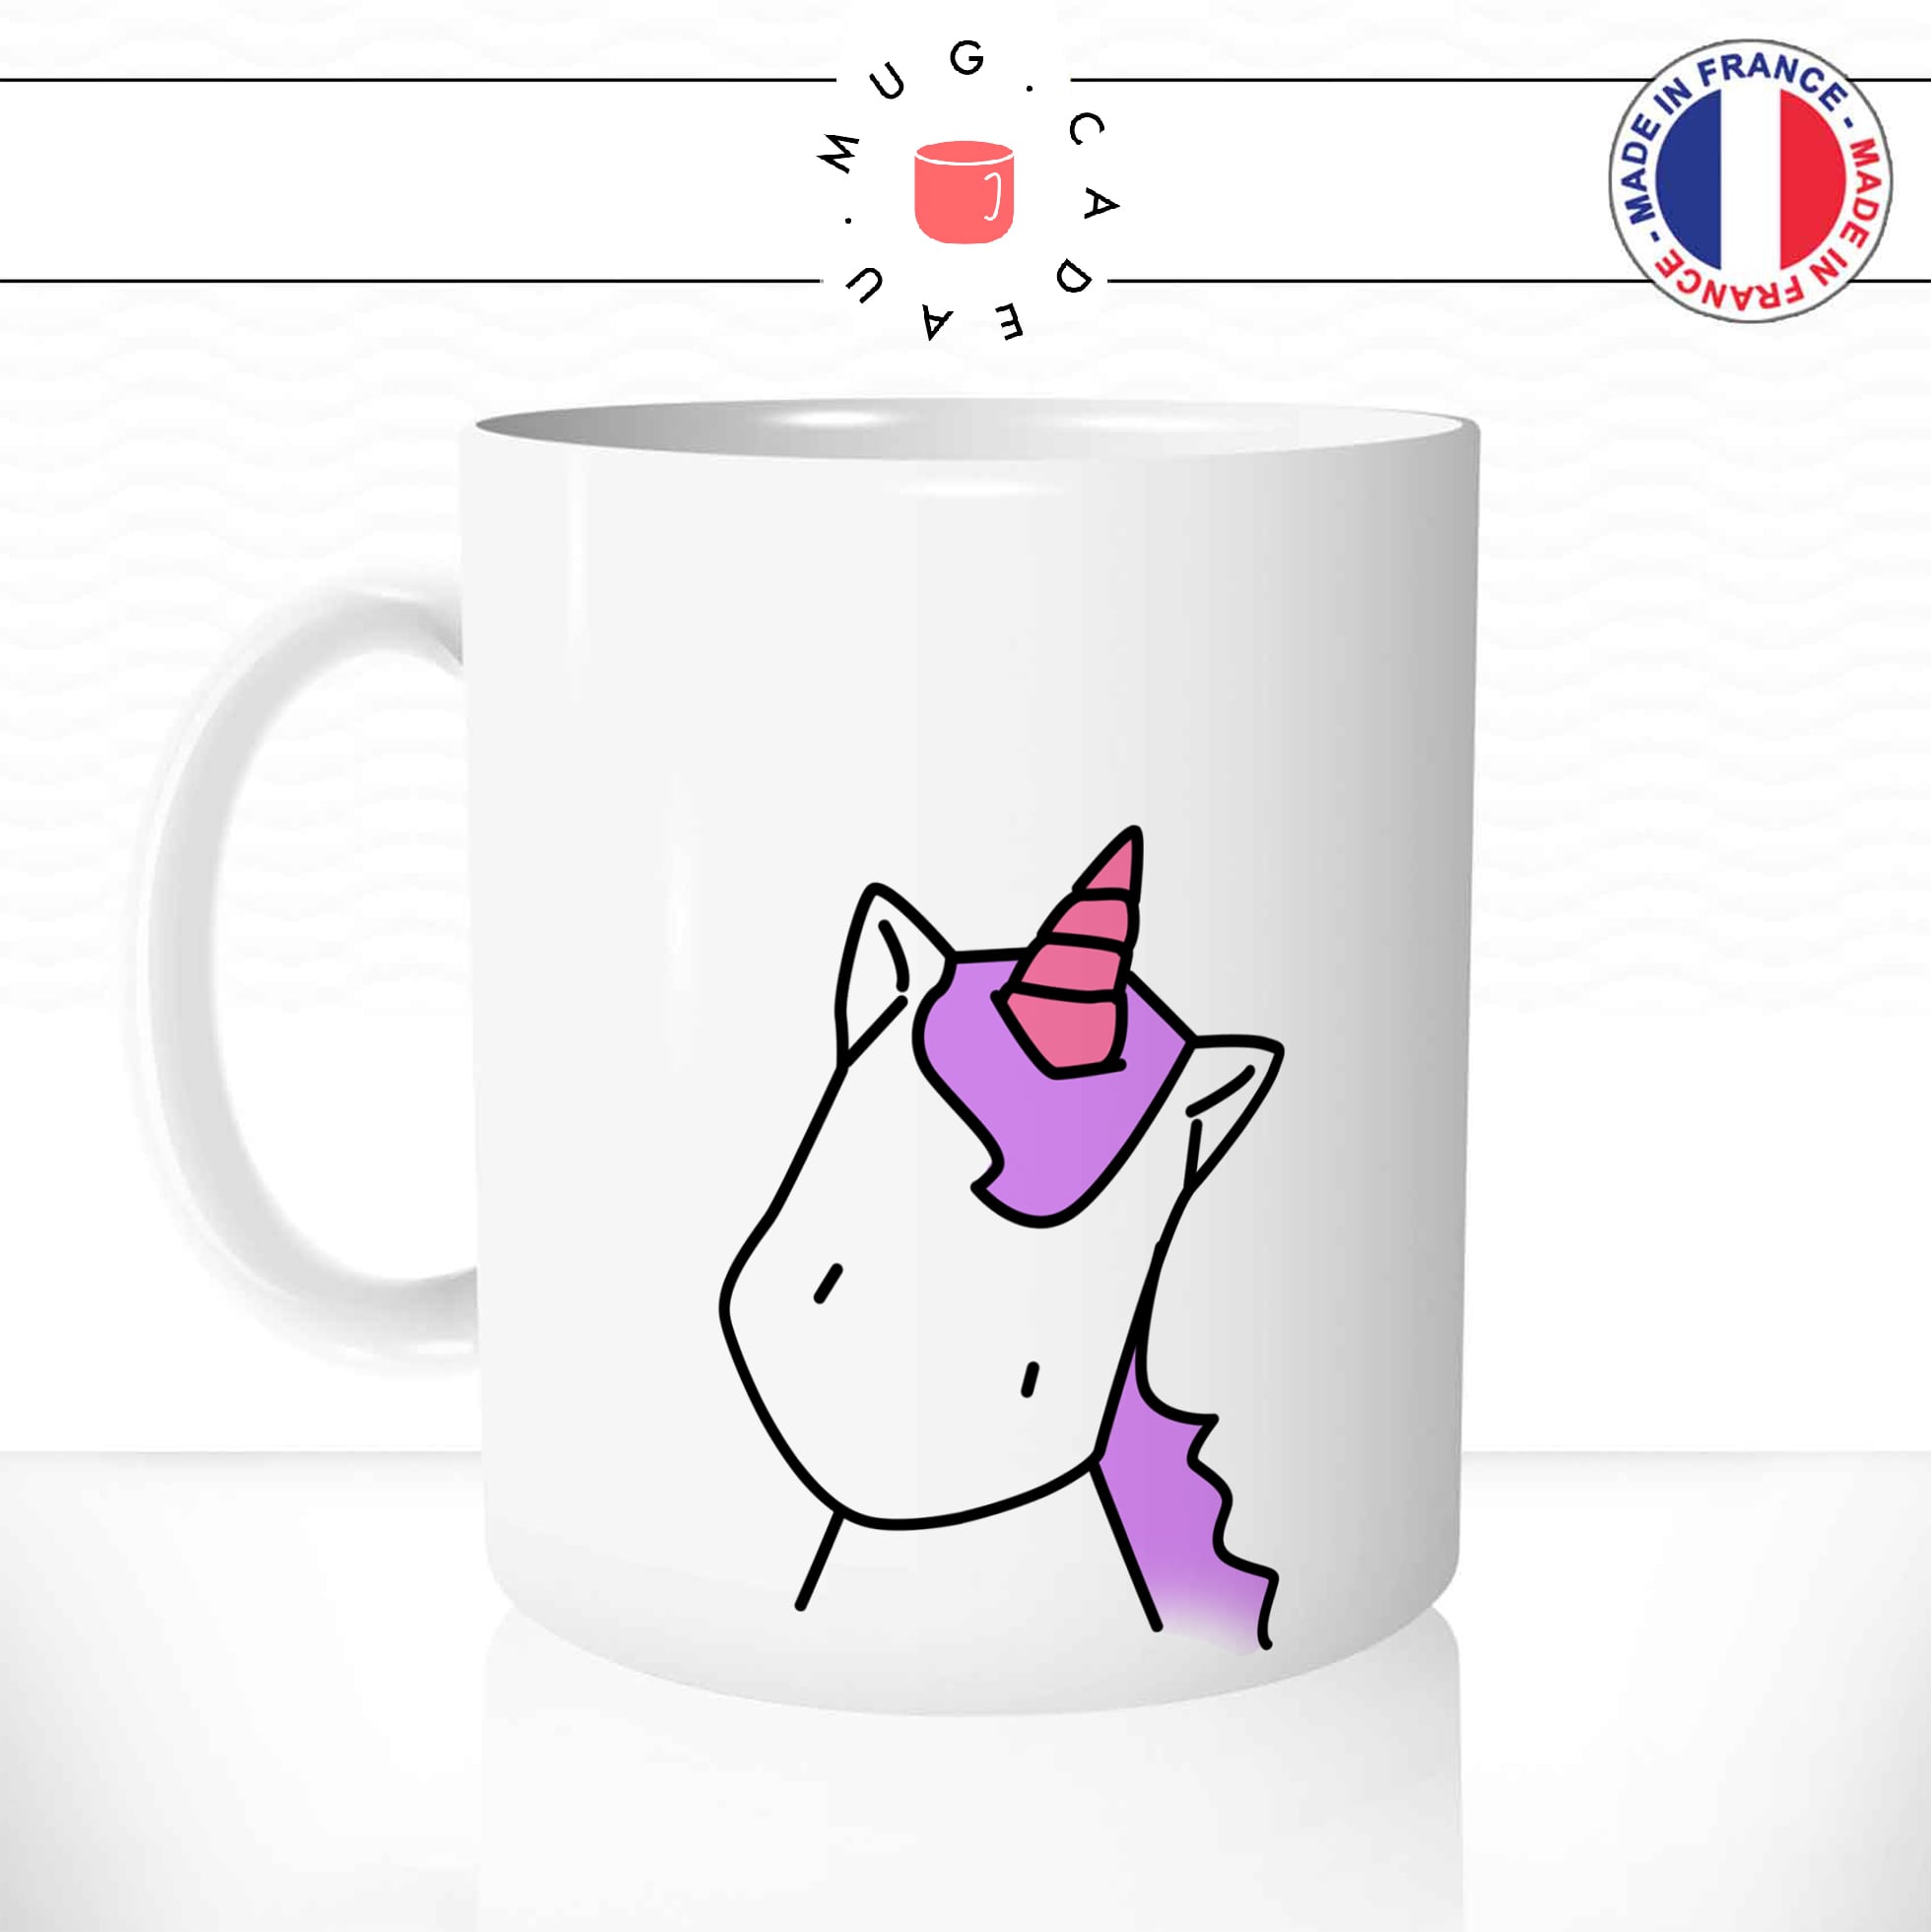 mug-tasse-animal-licorne-rose-criniere-kawaii-mignon-dessin-cool-fun-mugs-tasses-café-thé-idée-cadeau-original-personnalisable